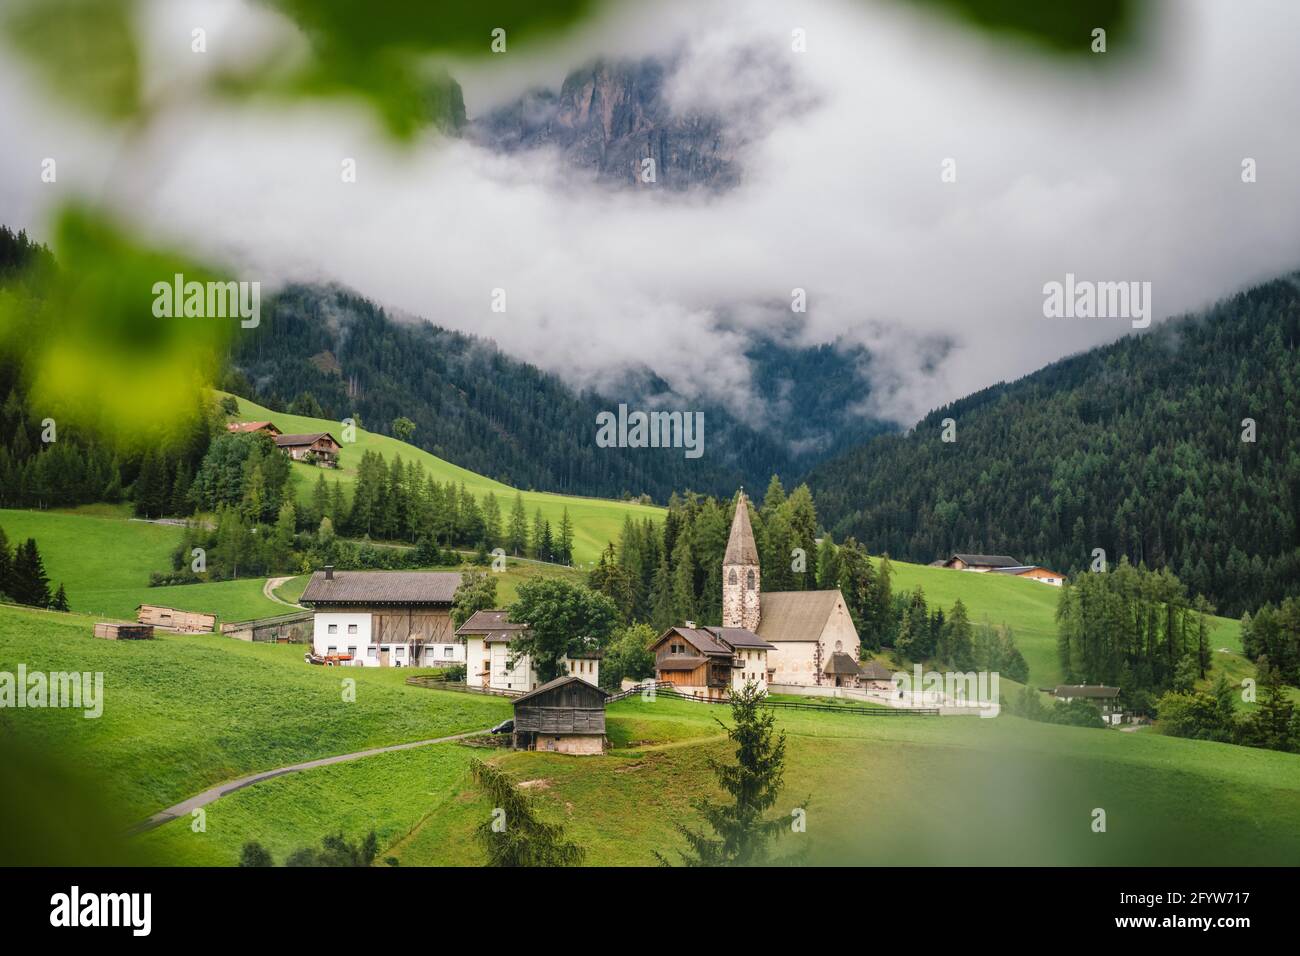 Santa Maddalena church in the Dolomites, Val di Funes, Italy, Europe. Stock Photo